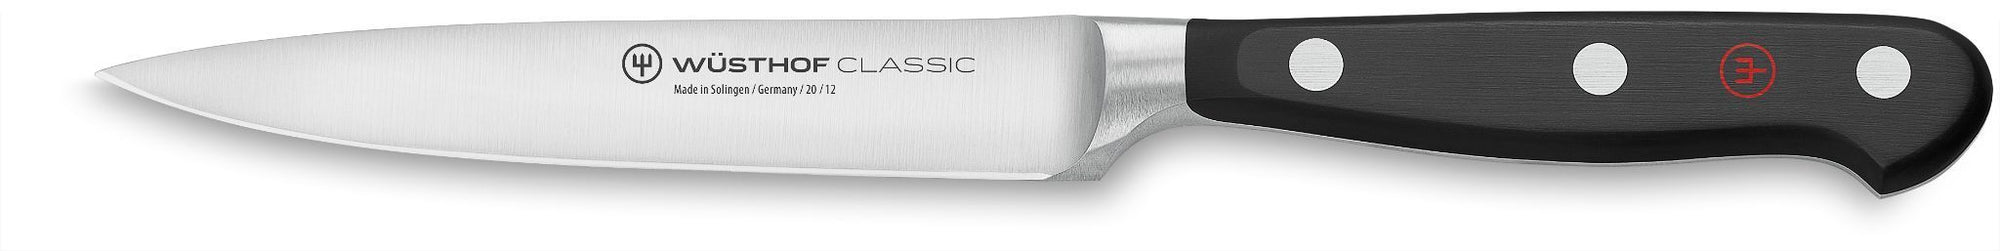 Wusthof Classic 12cm Paring knife